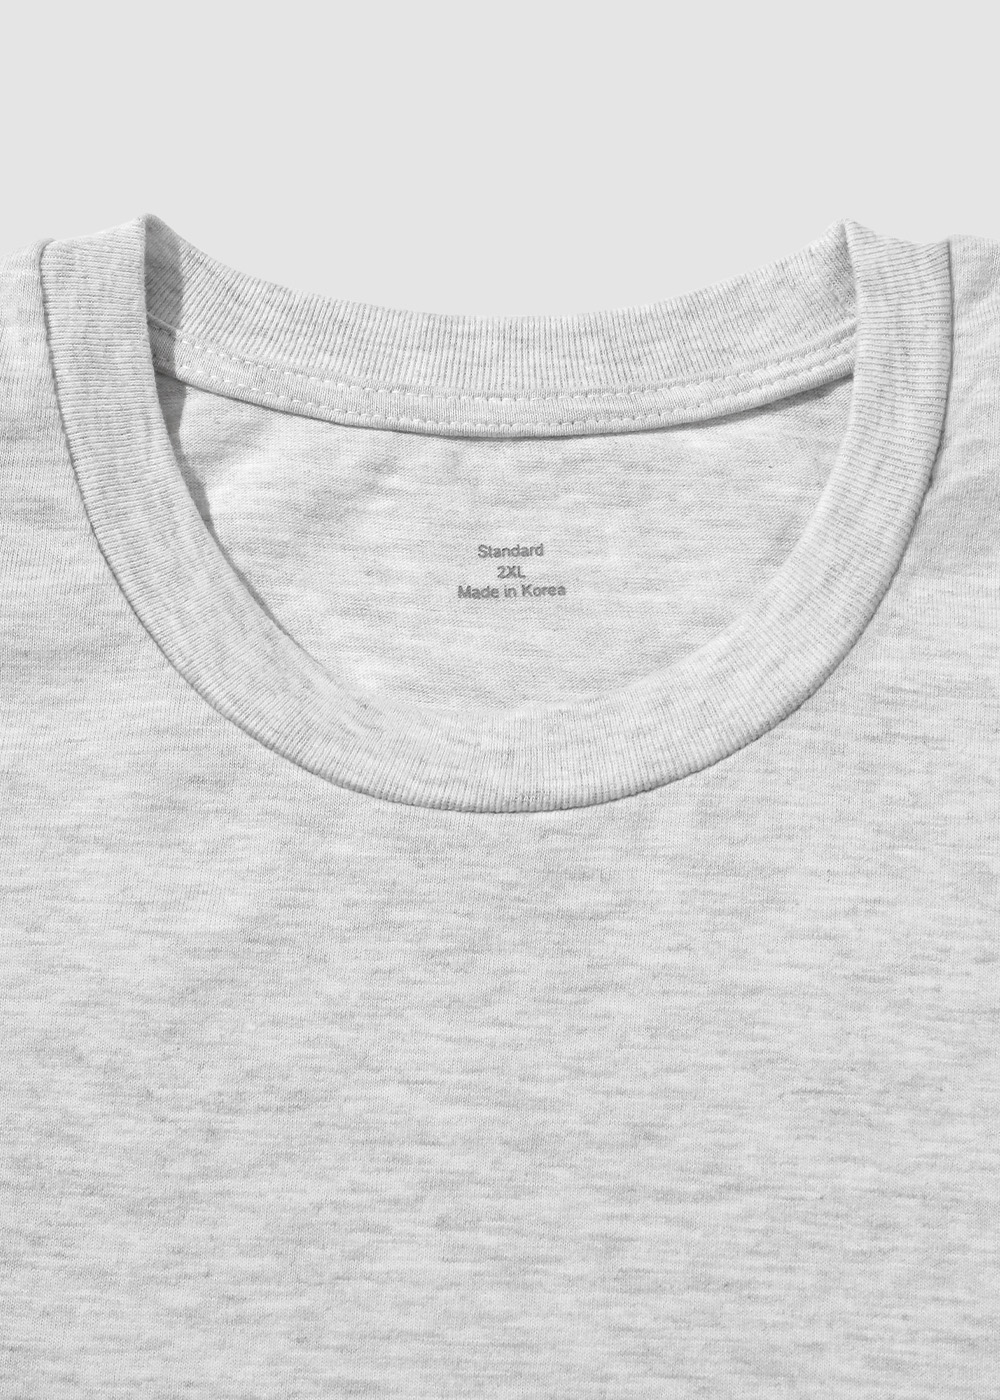 D. Tumbled Carded Cotton 100% 20/1 Single T-shirt _ melange white